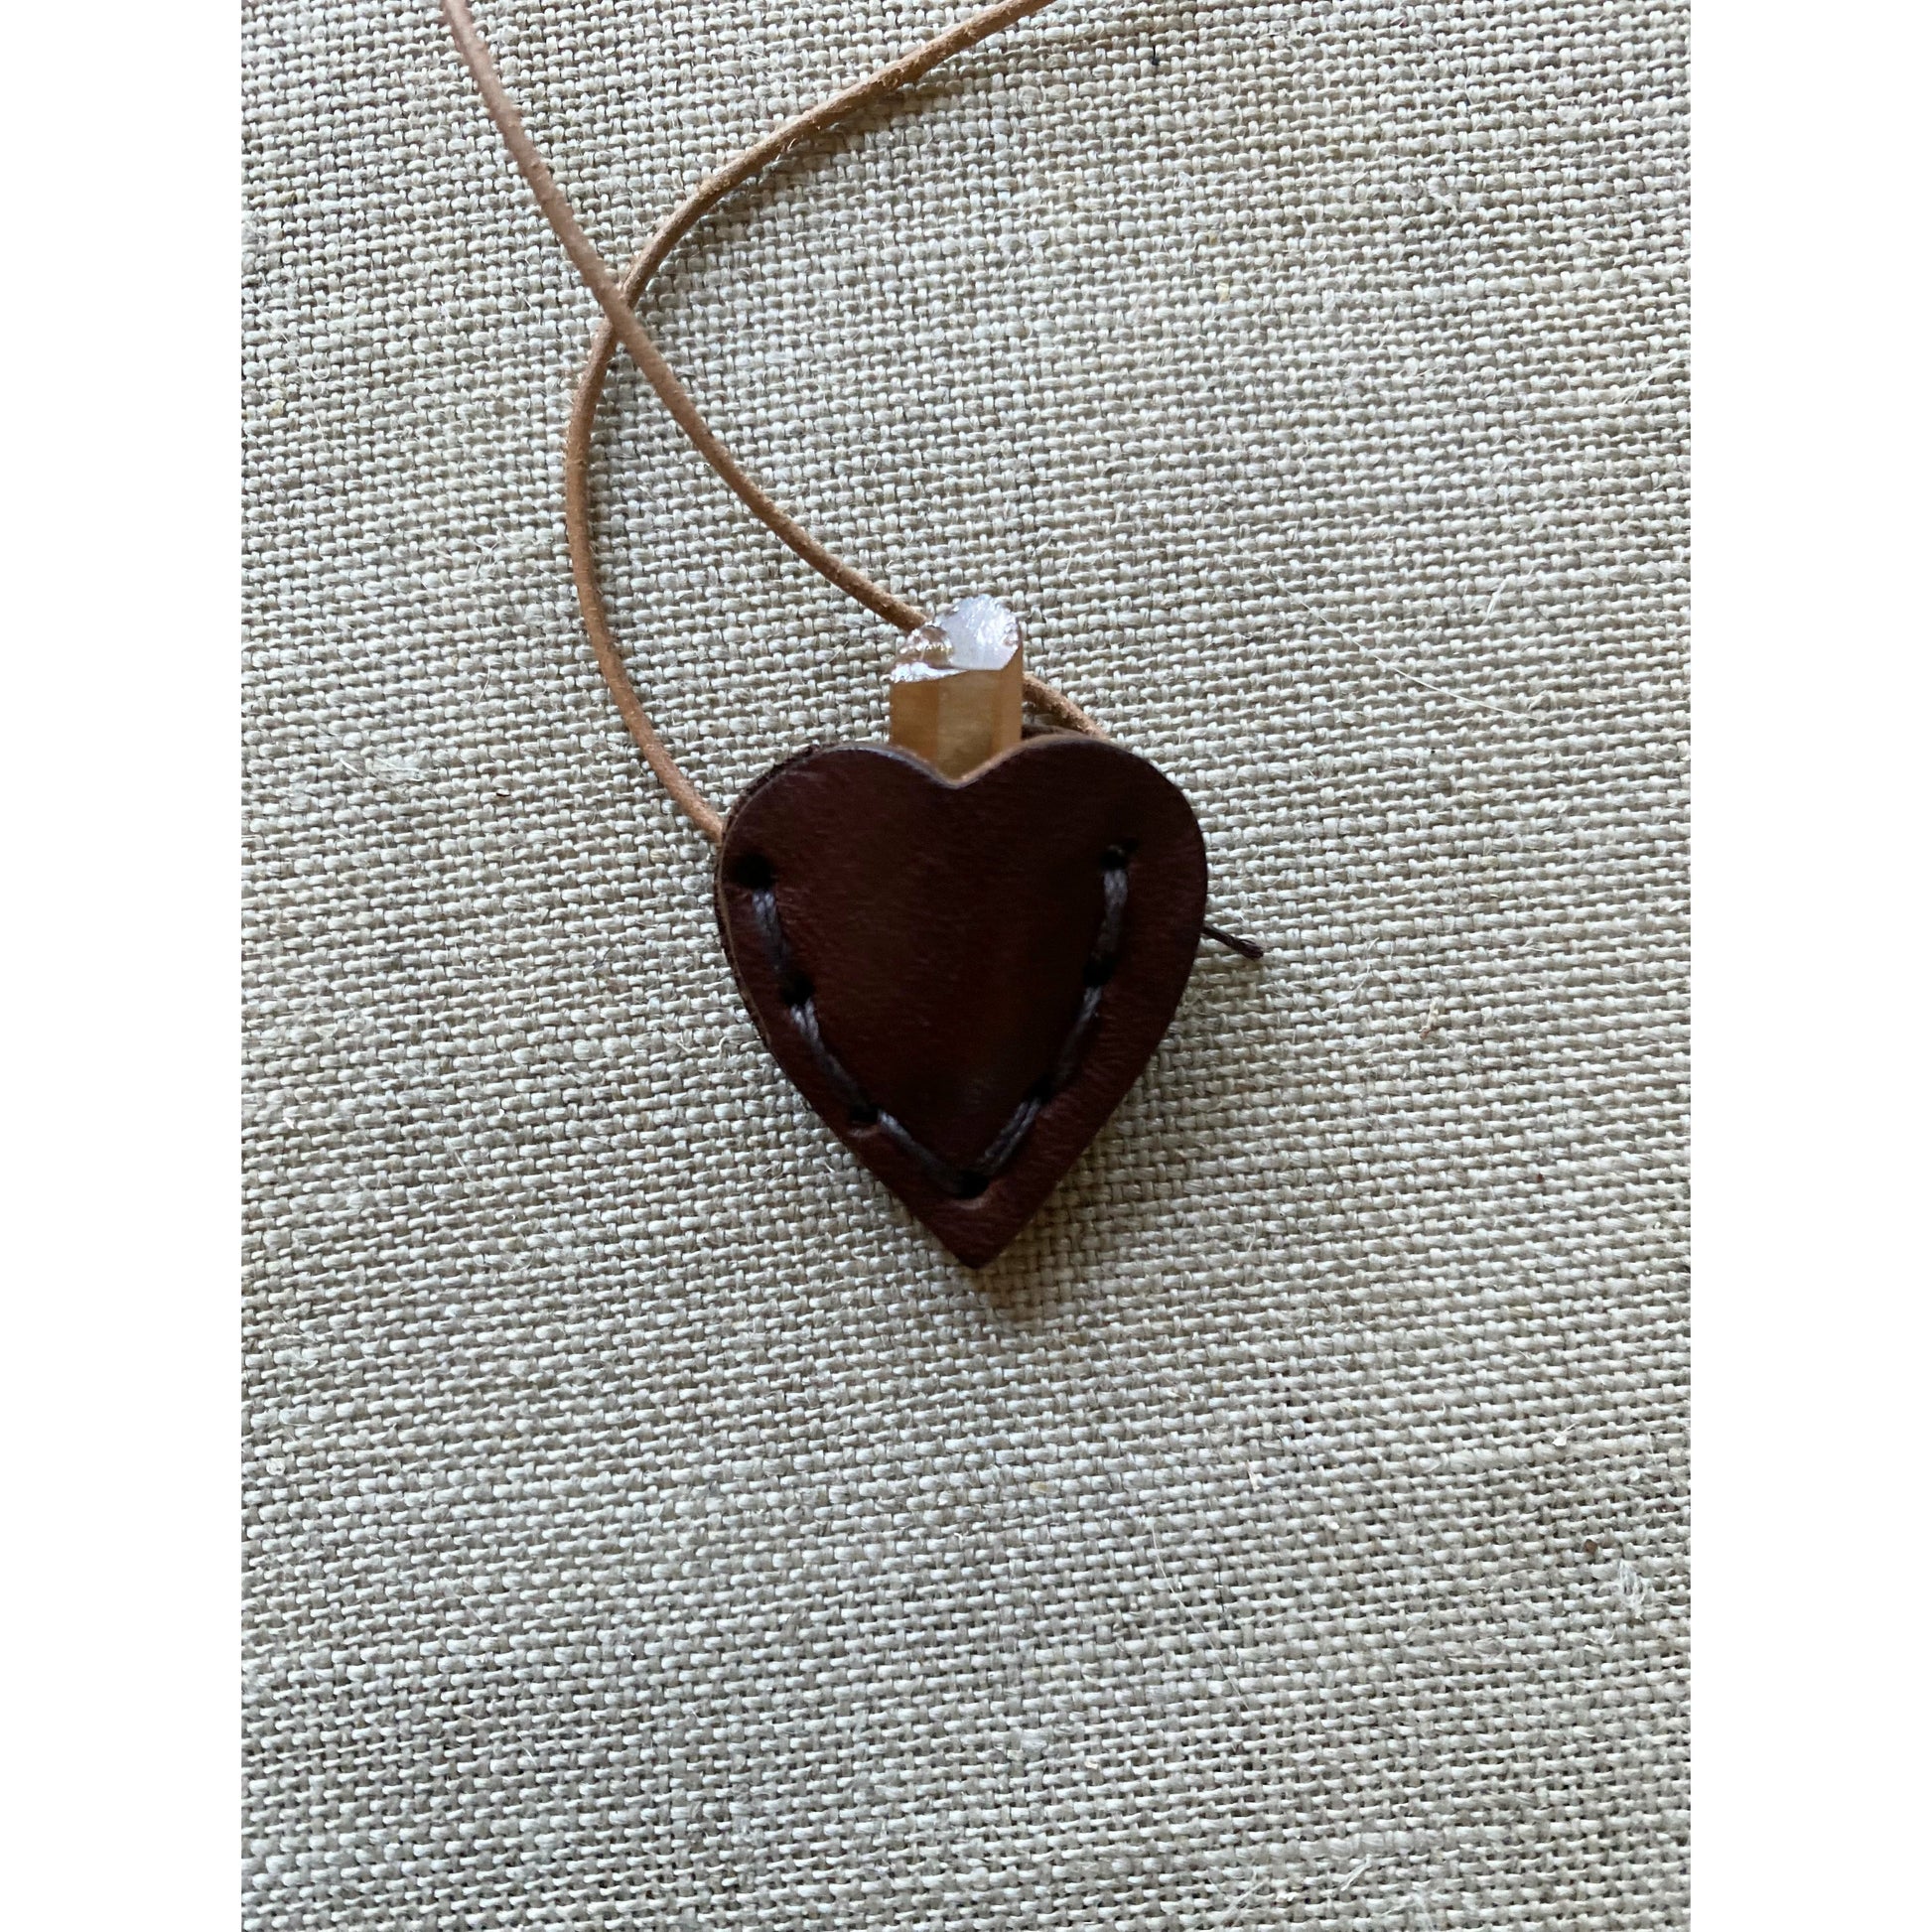 Leather totem necklace with tangerine stone  The Merchant Studio LLC -